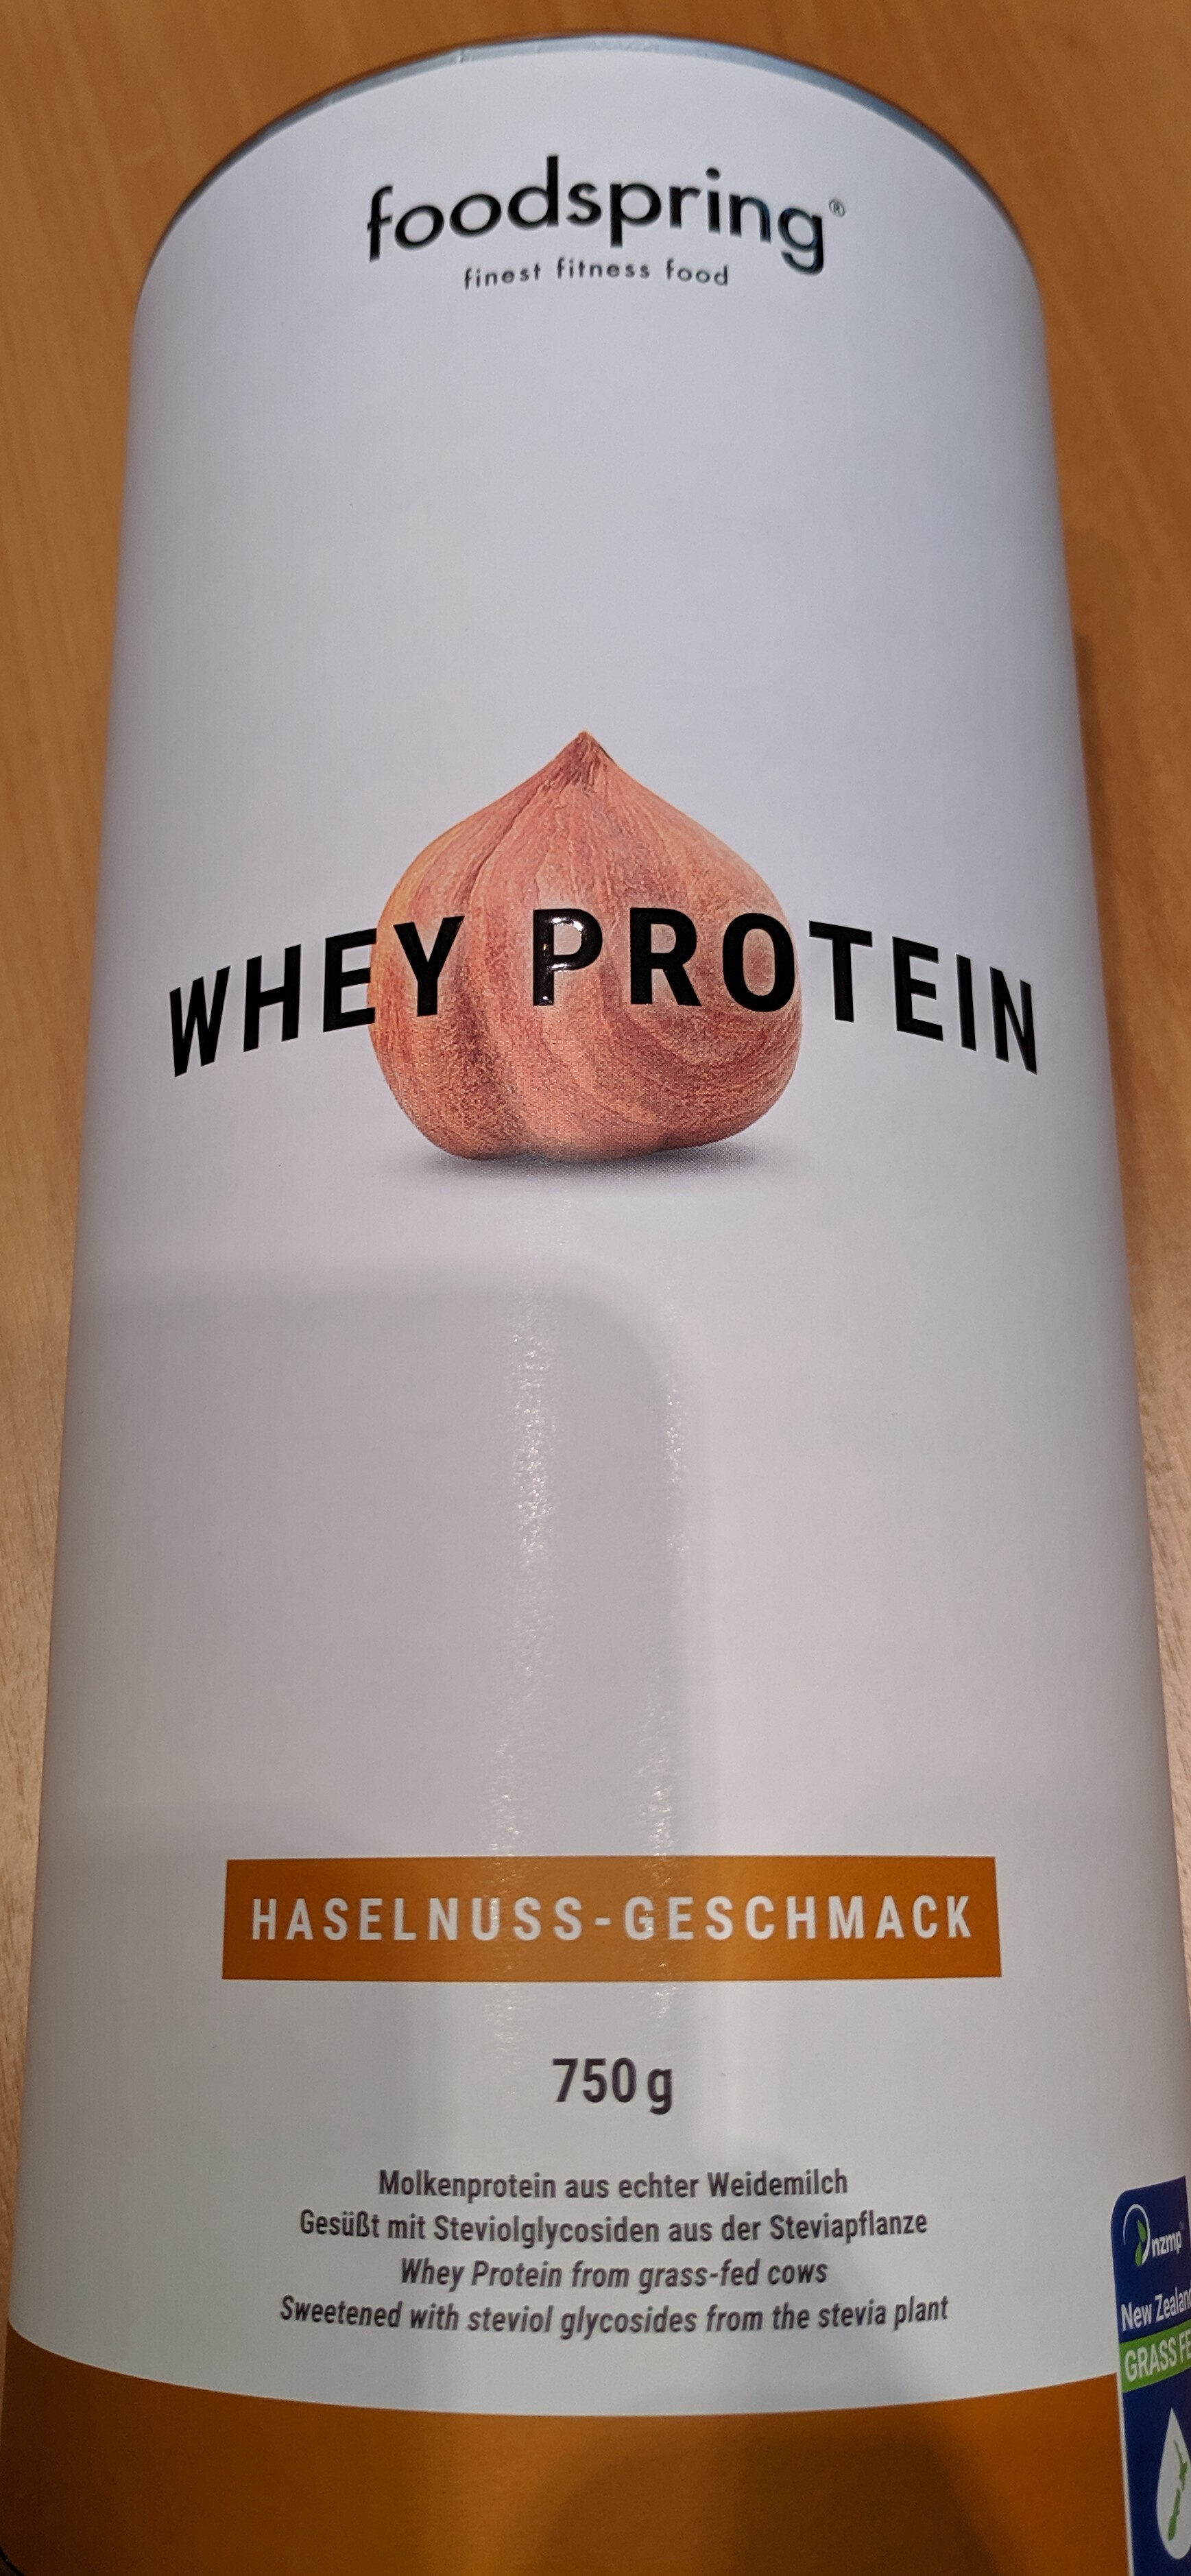 Whey Protein Halzenut - Product - en